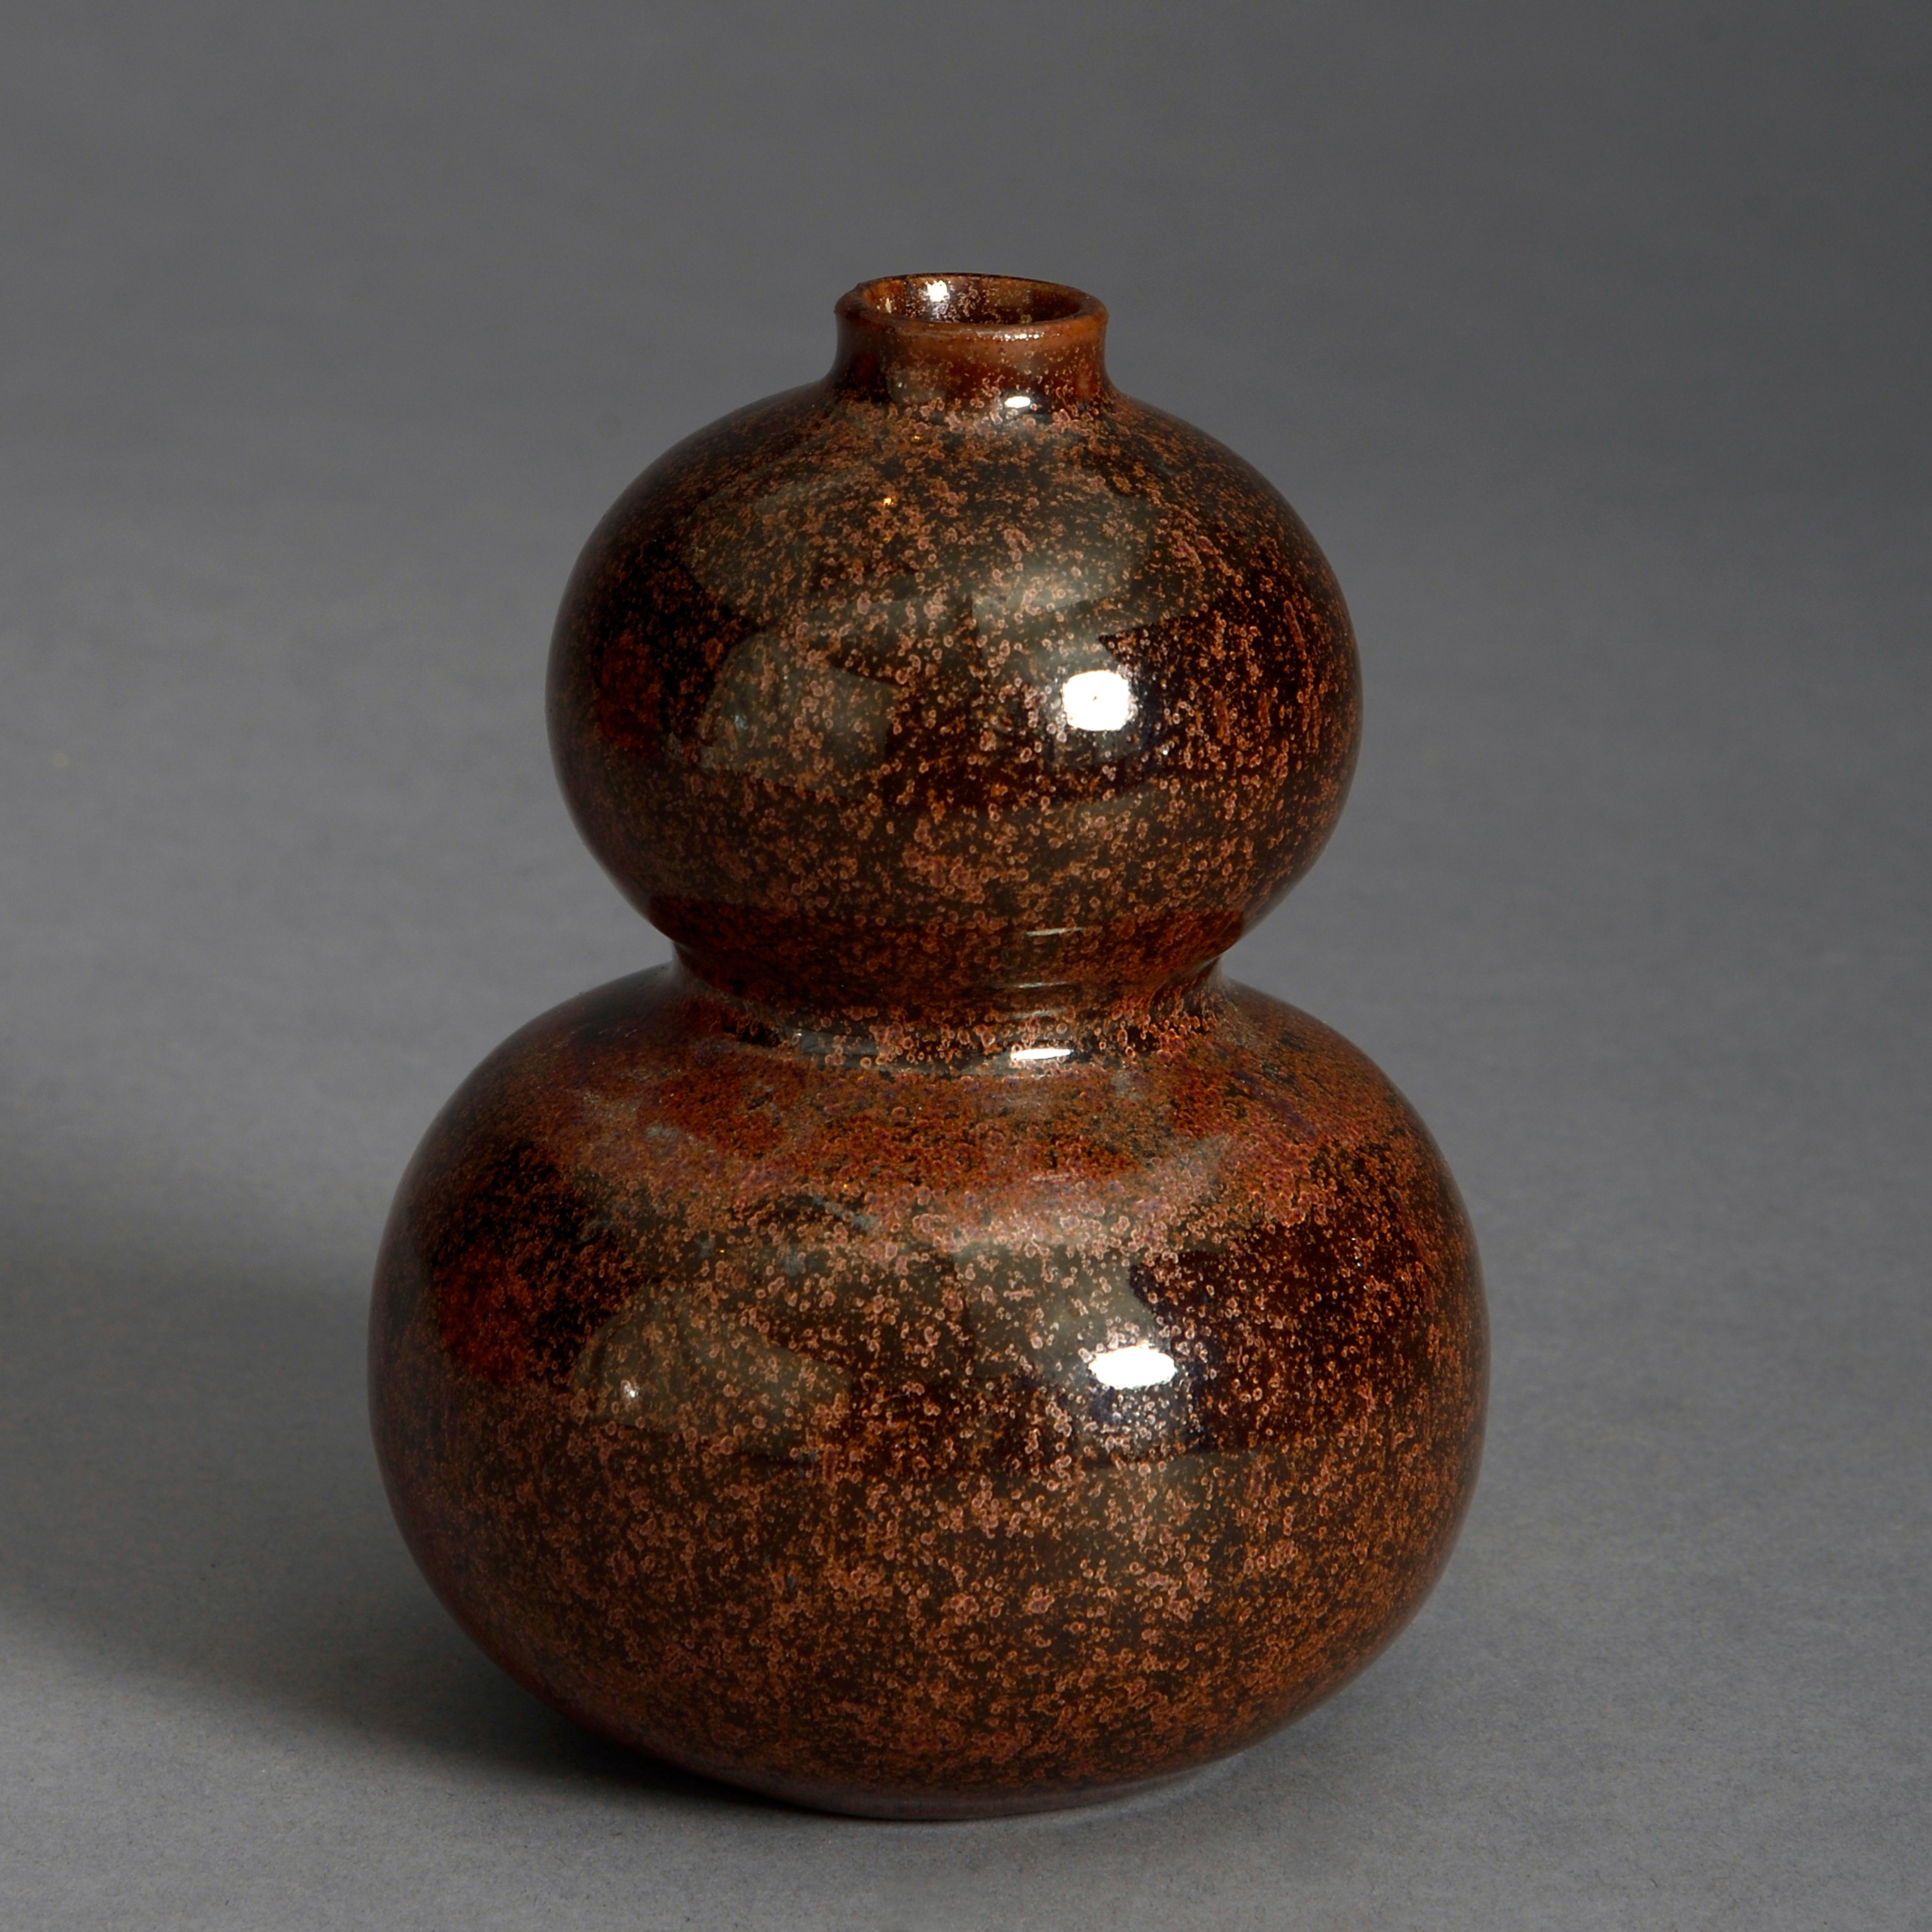 A mid-19th century tea dust glazed vase of gourd form

Late Qing Dynasty.